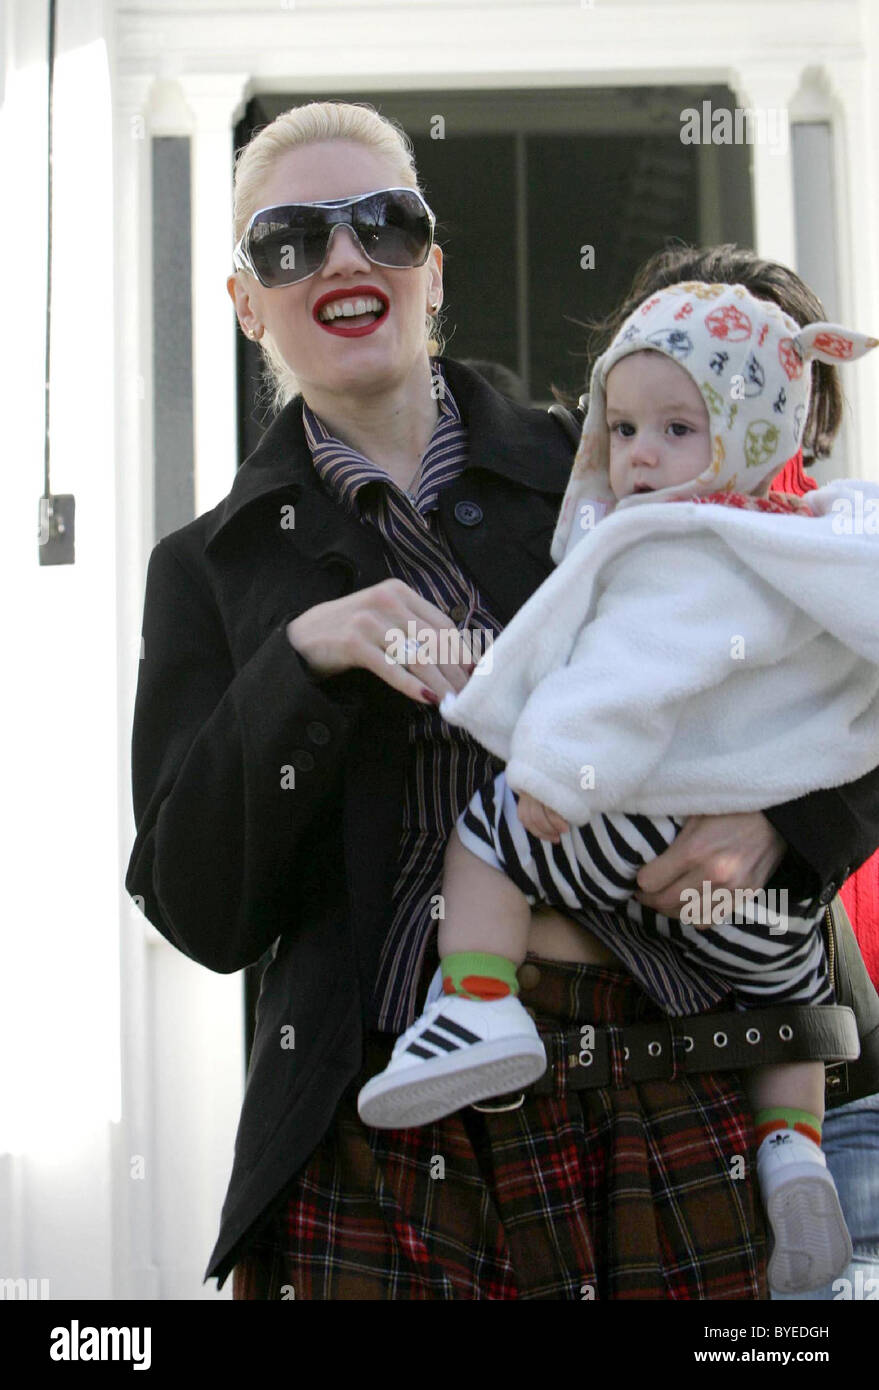 Gwen Stefani leaving home with baby Kingston London, England - 25.01.06 Stock Photo